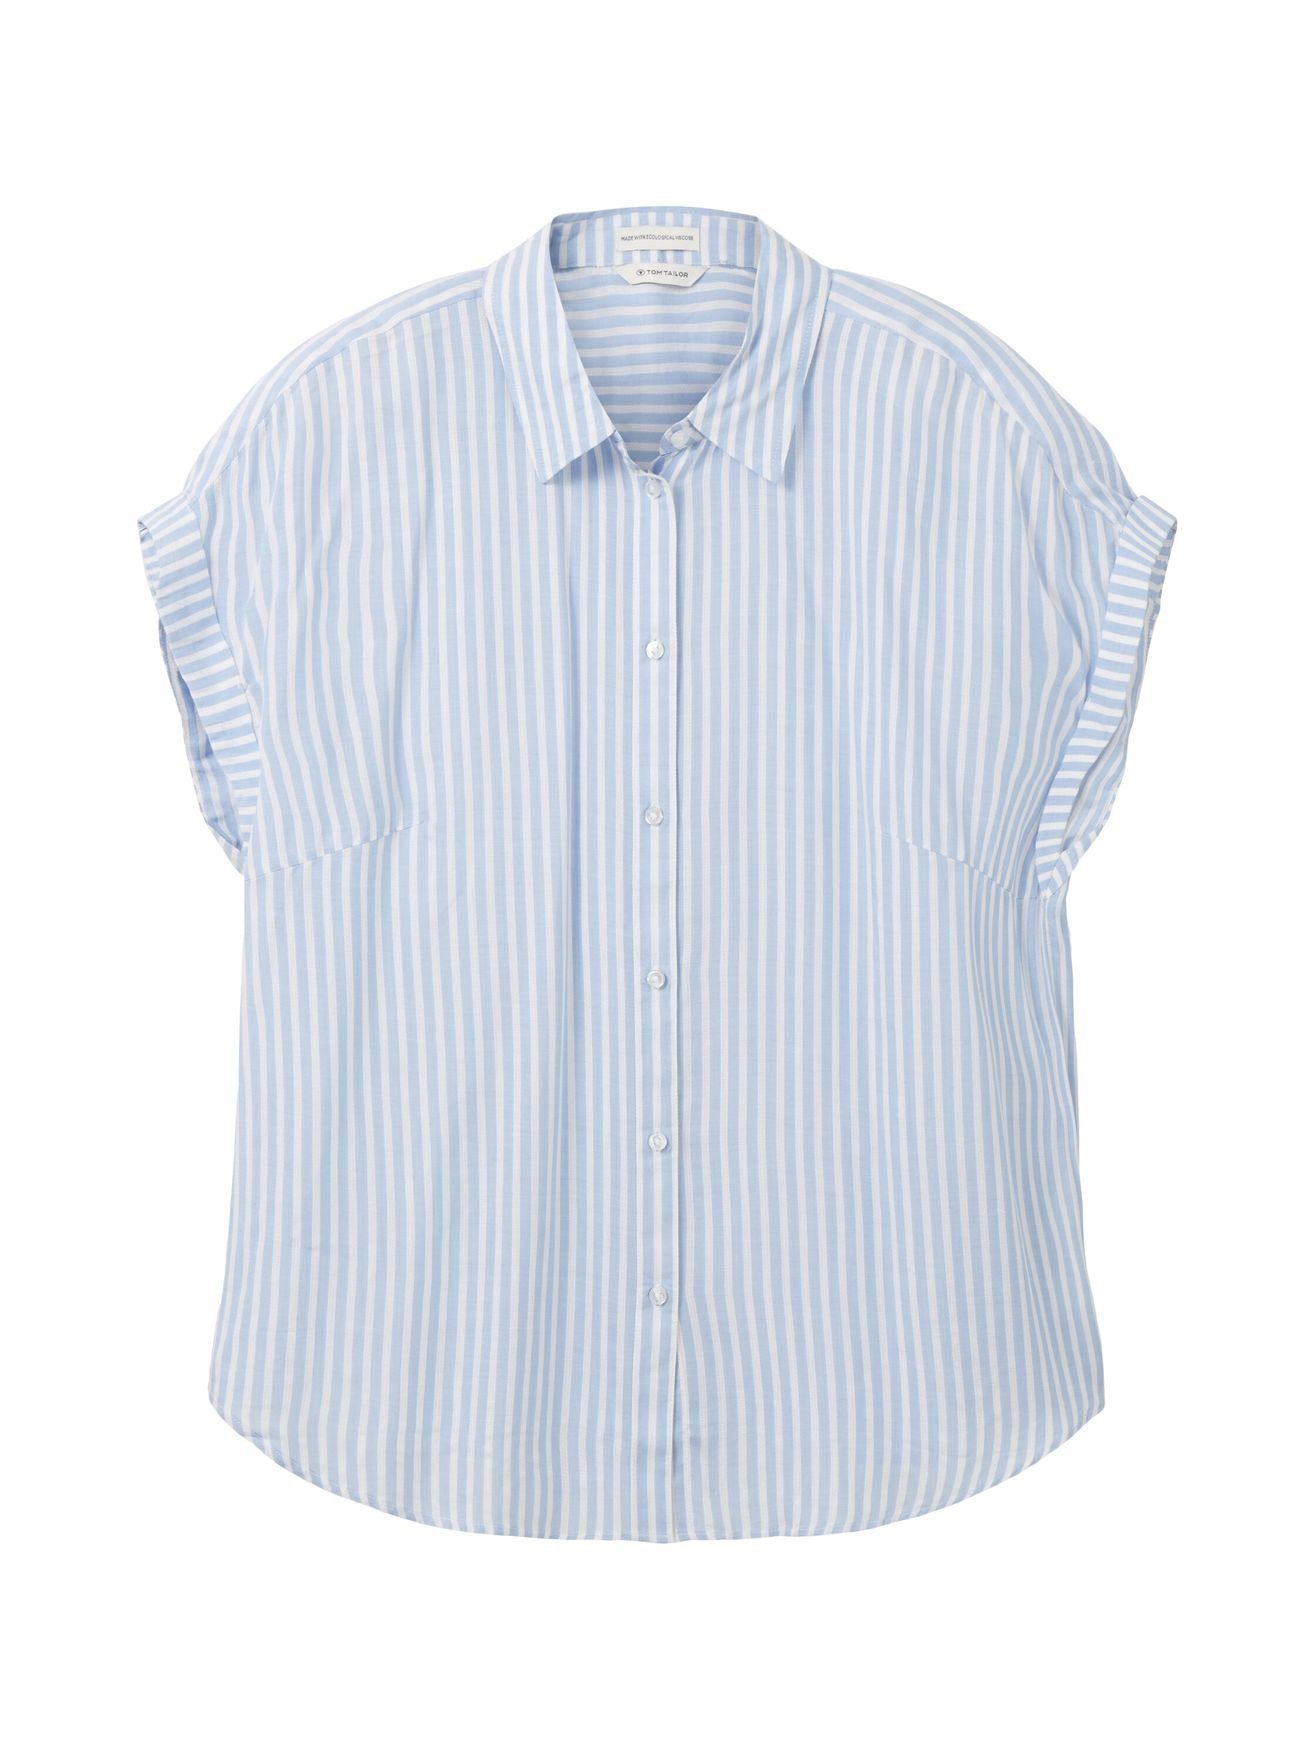 Übergröße 5364 in TAILOR Gestreifte Blau Shirt Kurzarm Blusenshirt Bluse TOM